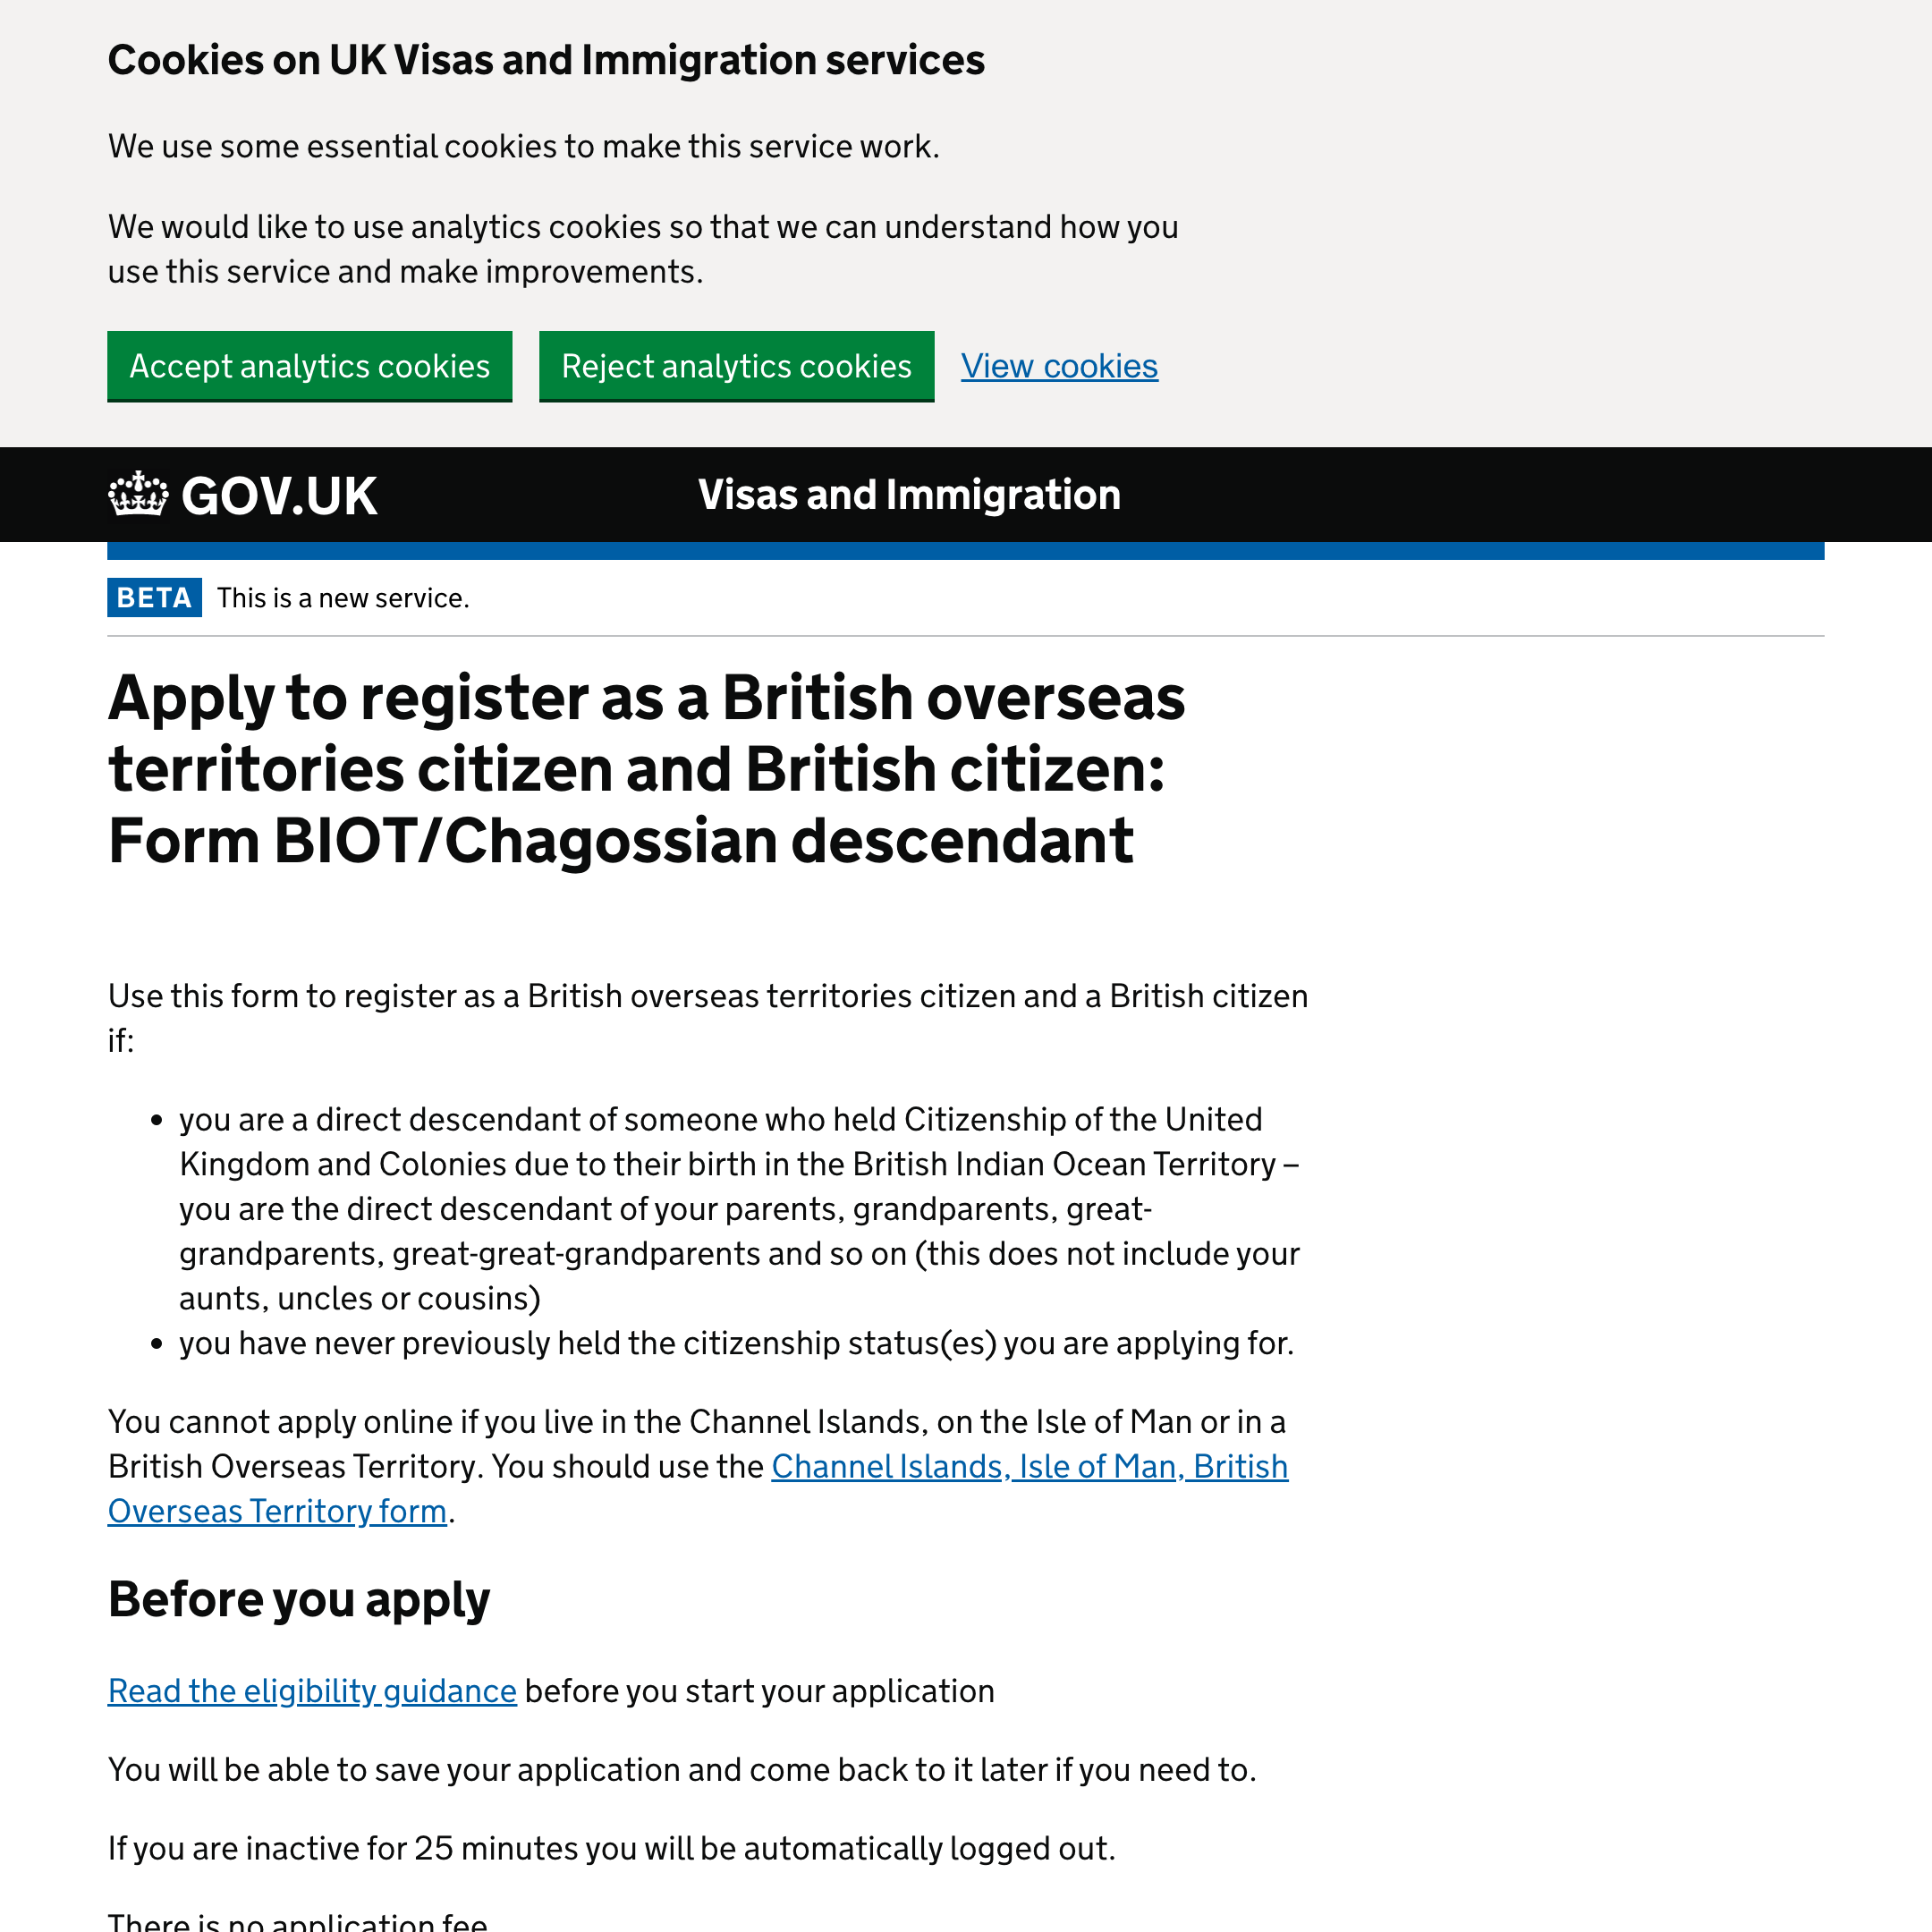 Apply for British citizenship as a person of Chagossian descent